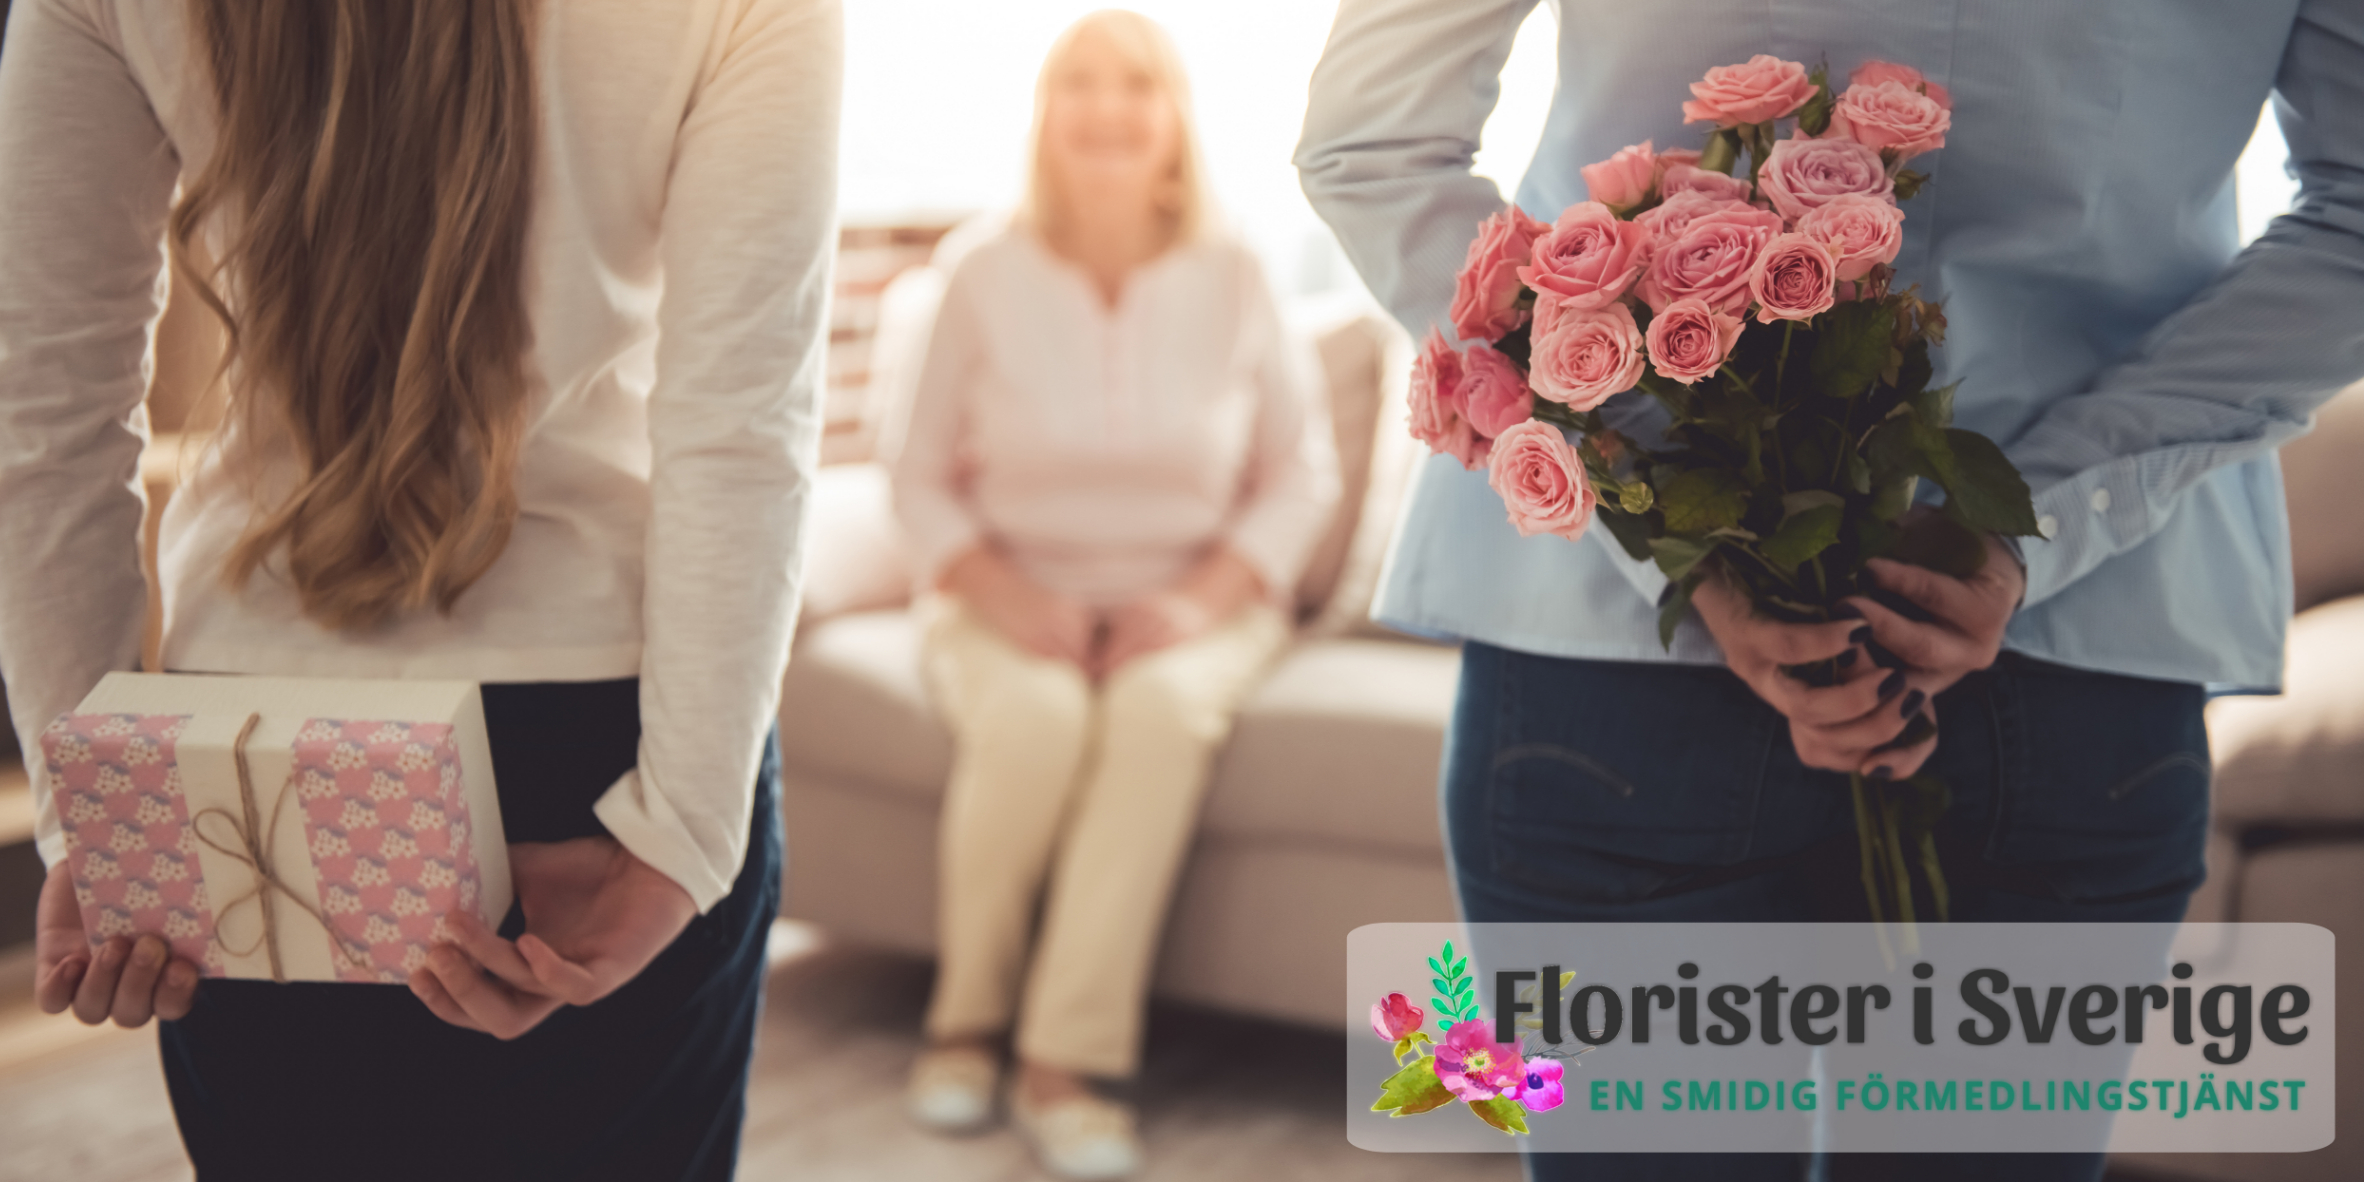 Skicka blommor med bud via Florister i Sverige.